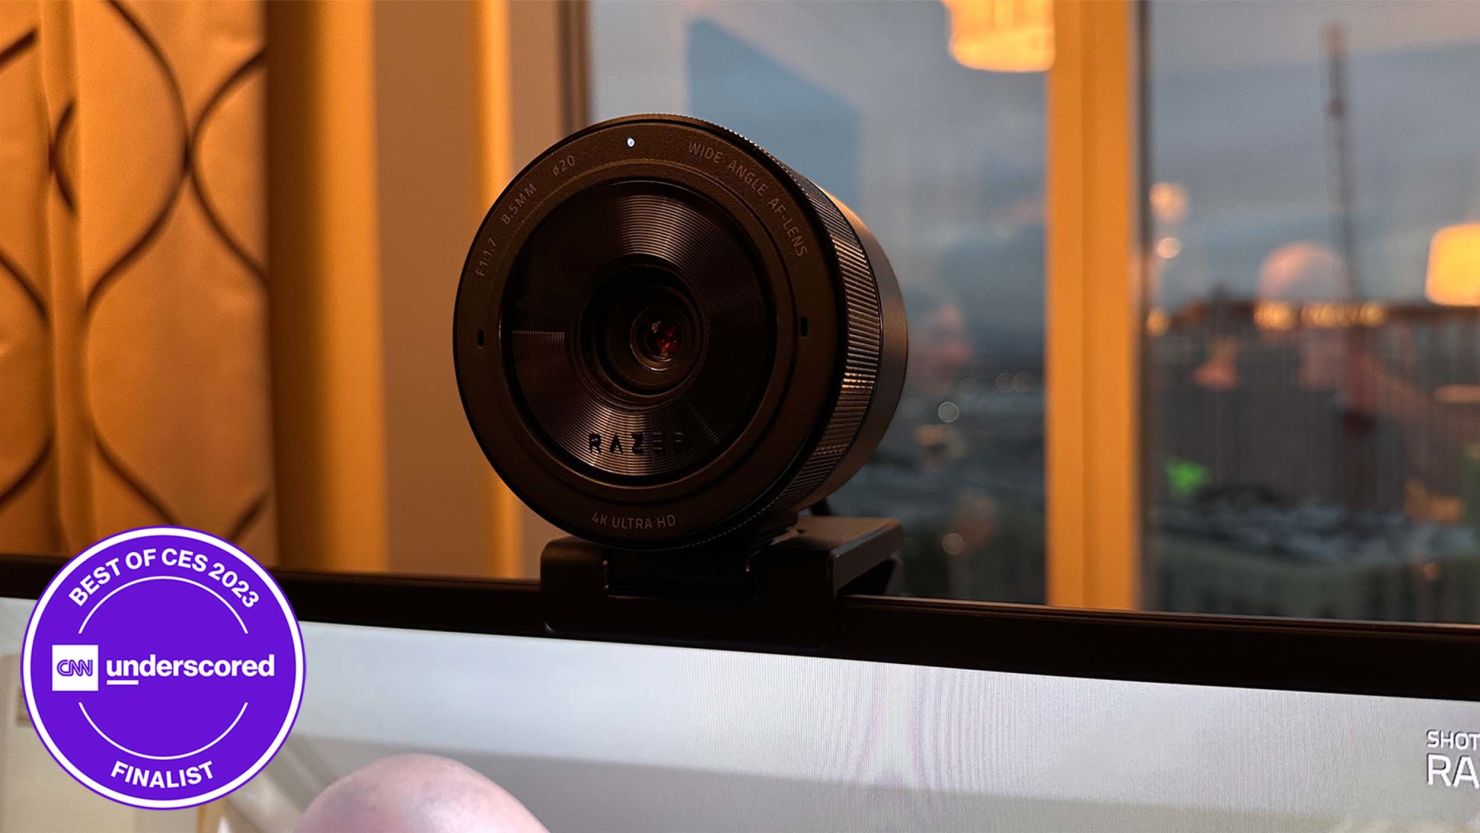 Dell Ultrasharp Webcam review vs the Razer Kiyo Pro